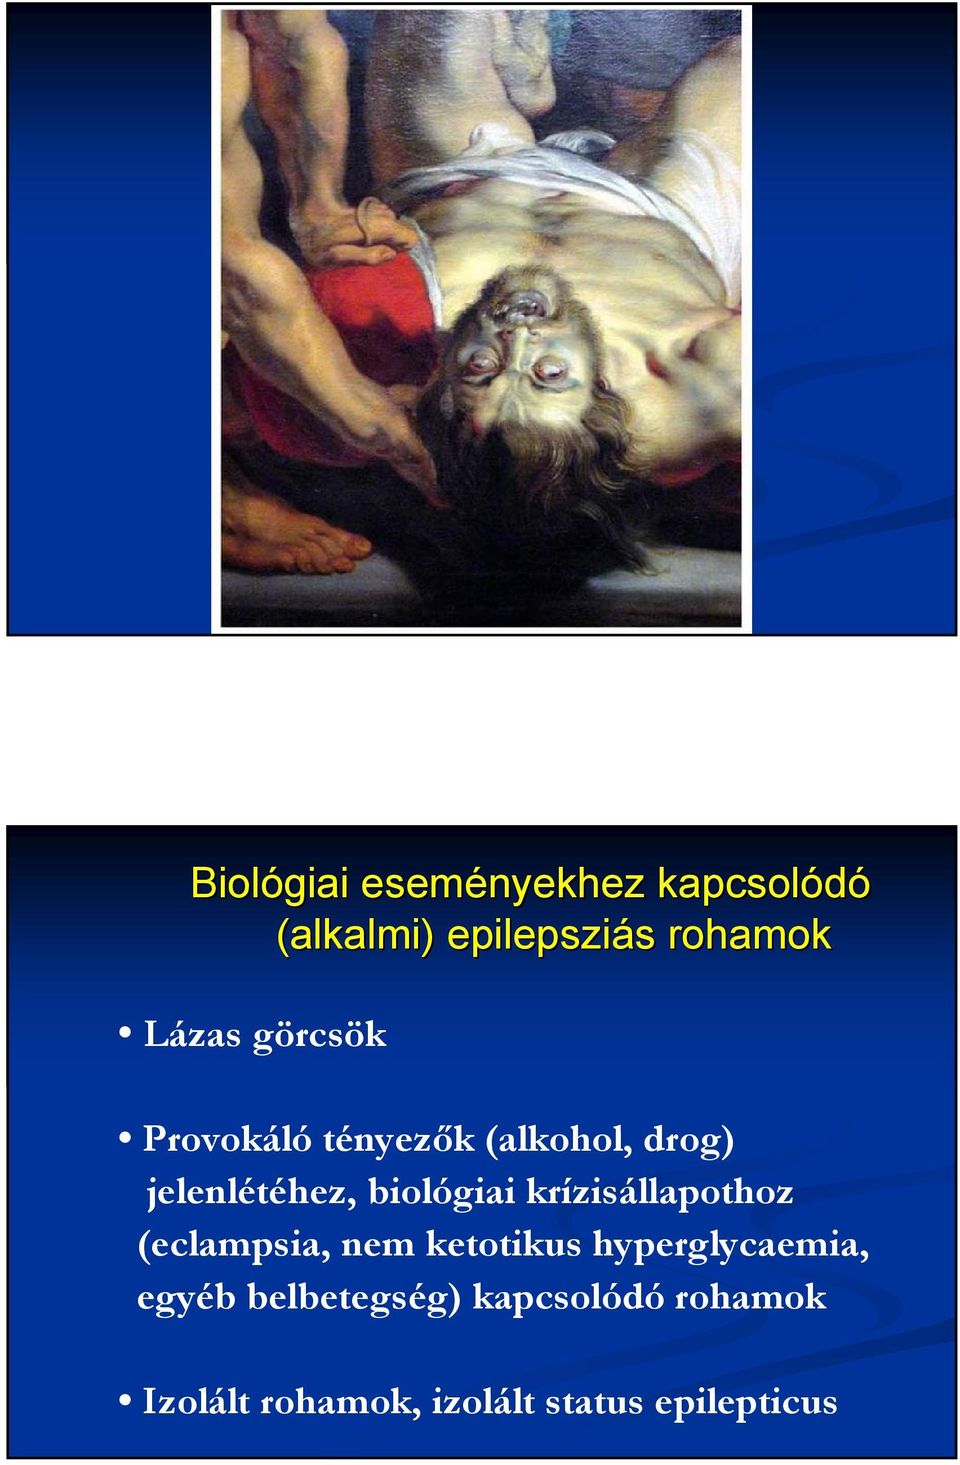 biológiai krízisállapothoz (eclampsia, nem ketotikus hyperglycaemia,